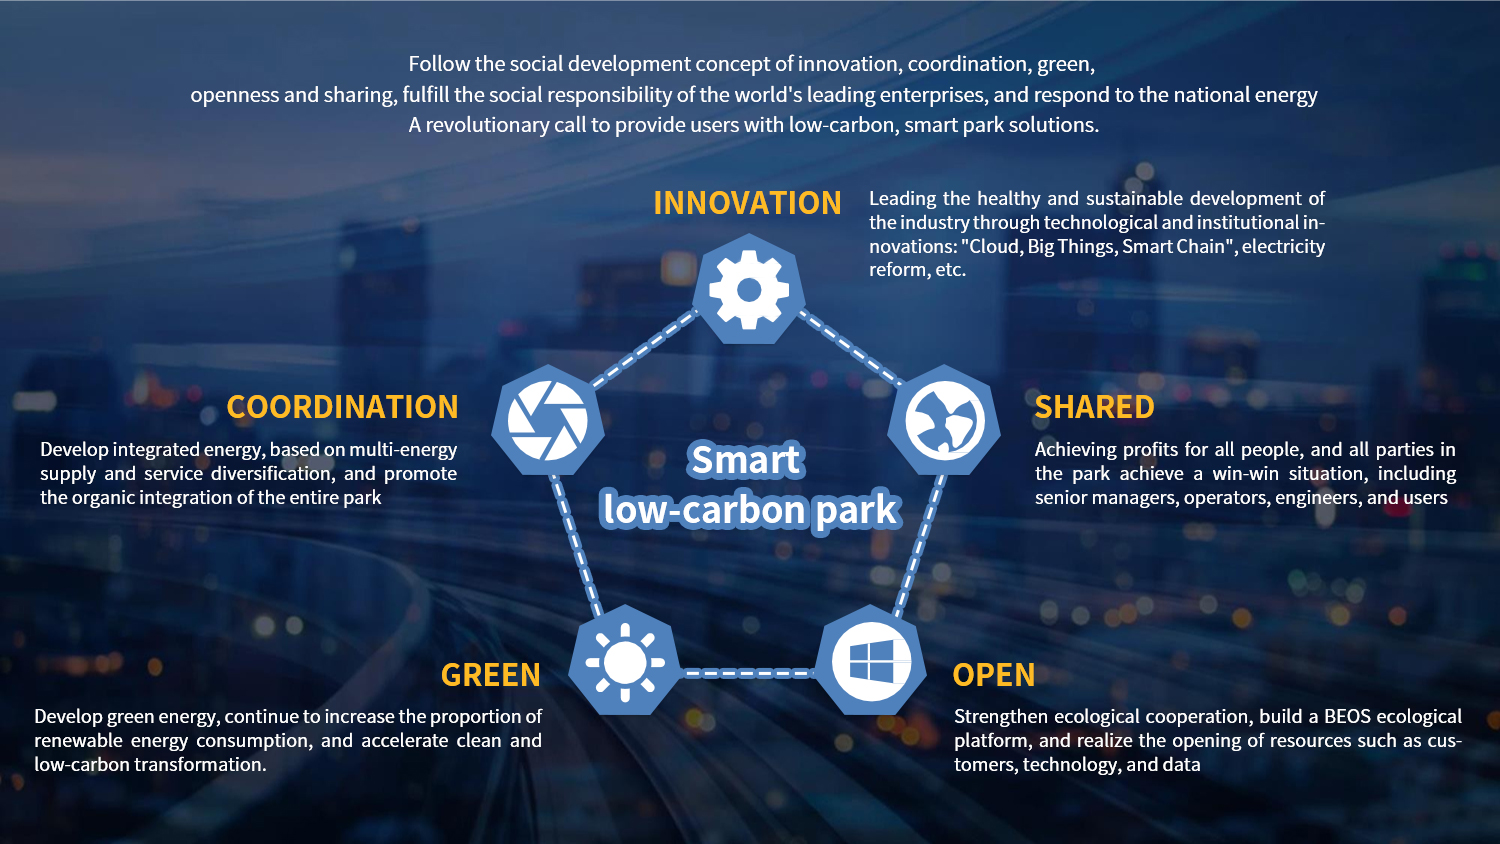 Introduction to Smart Photovoltaic Low-Carbon Park